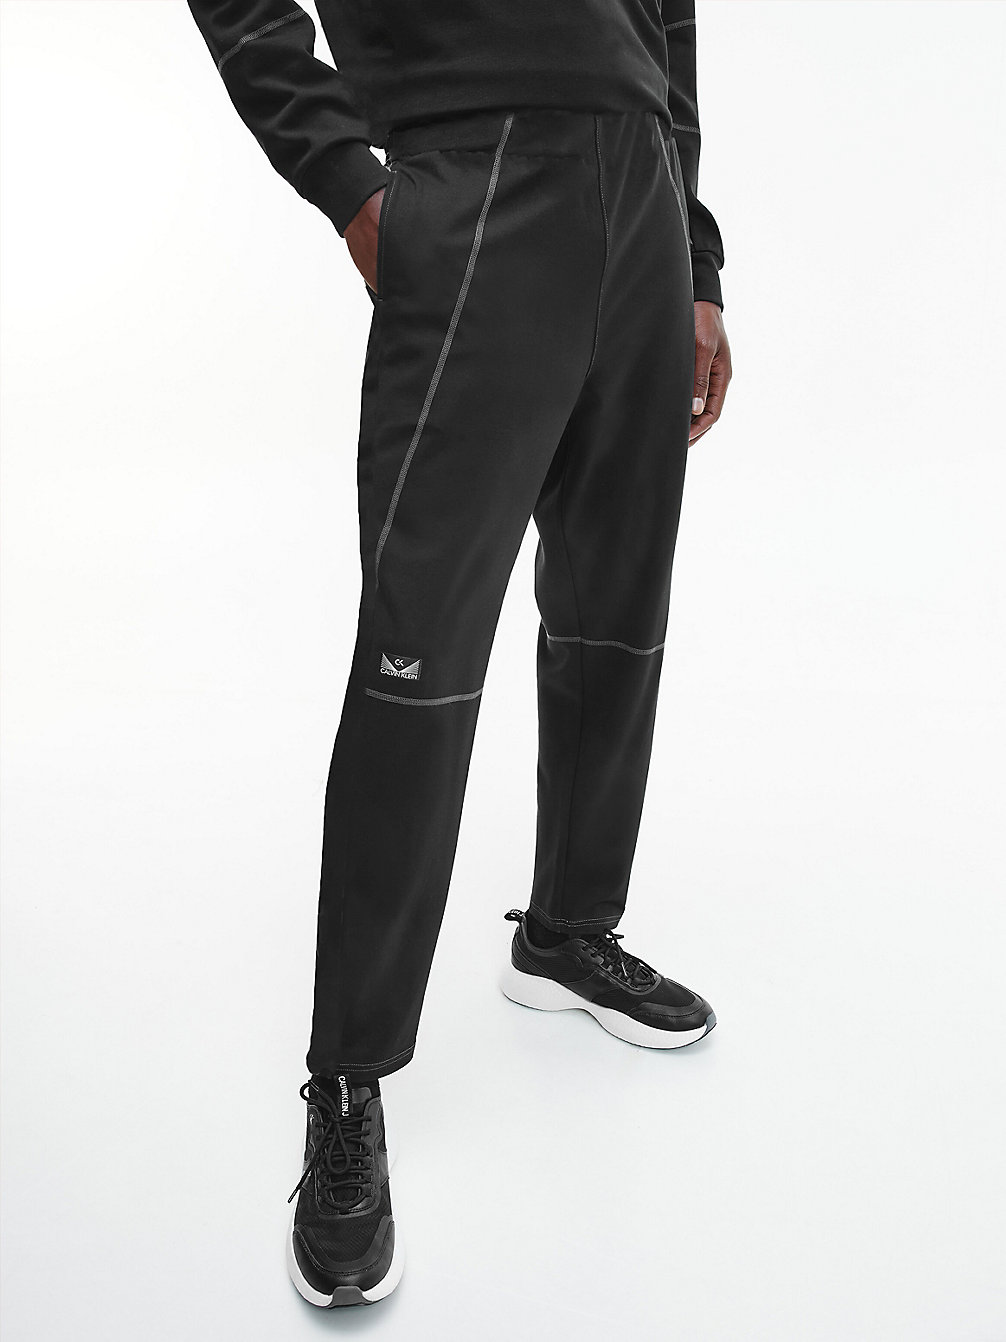 CK BLACK/ PERISCOPE/ STONE GREY Jogginghose Aus Comfort-Stretch undefined Herren Calvin Klein